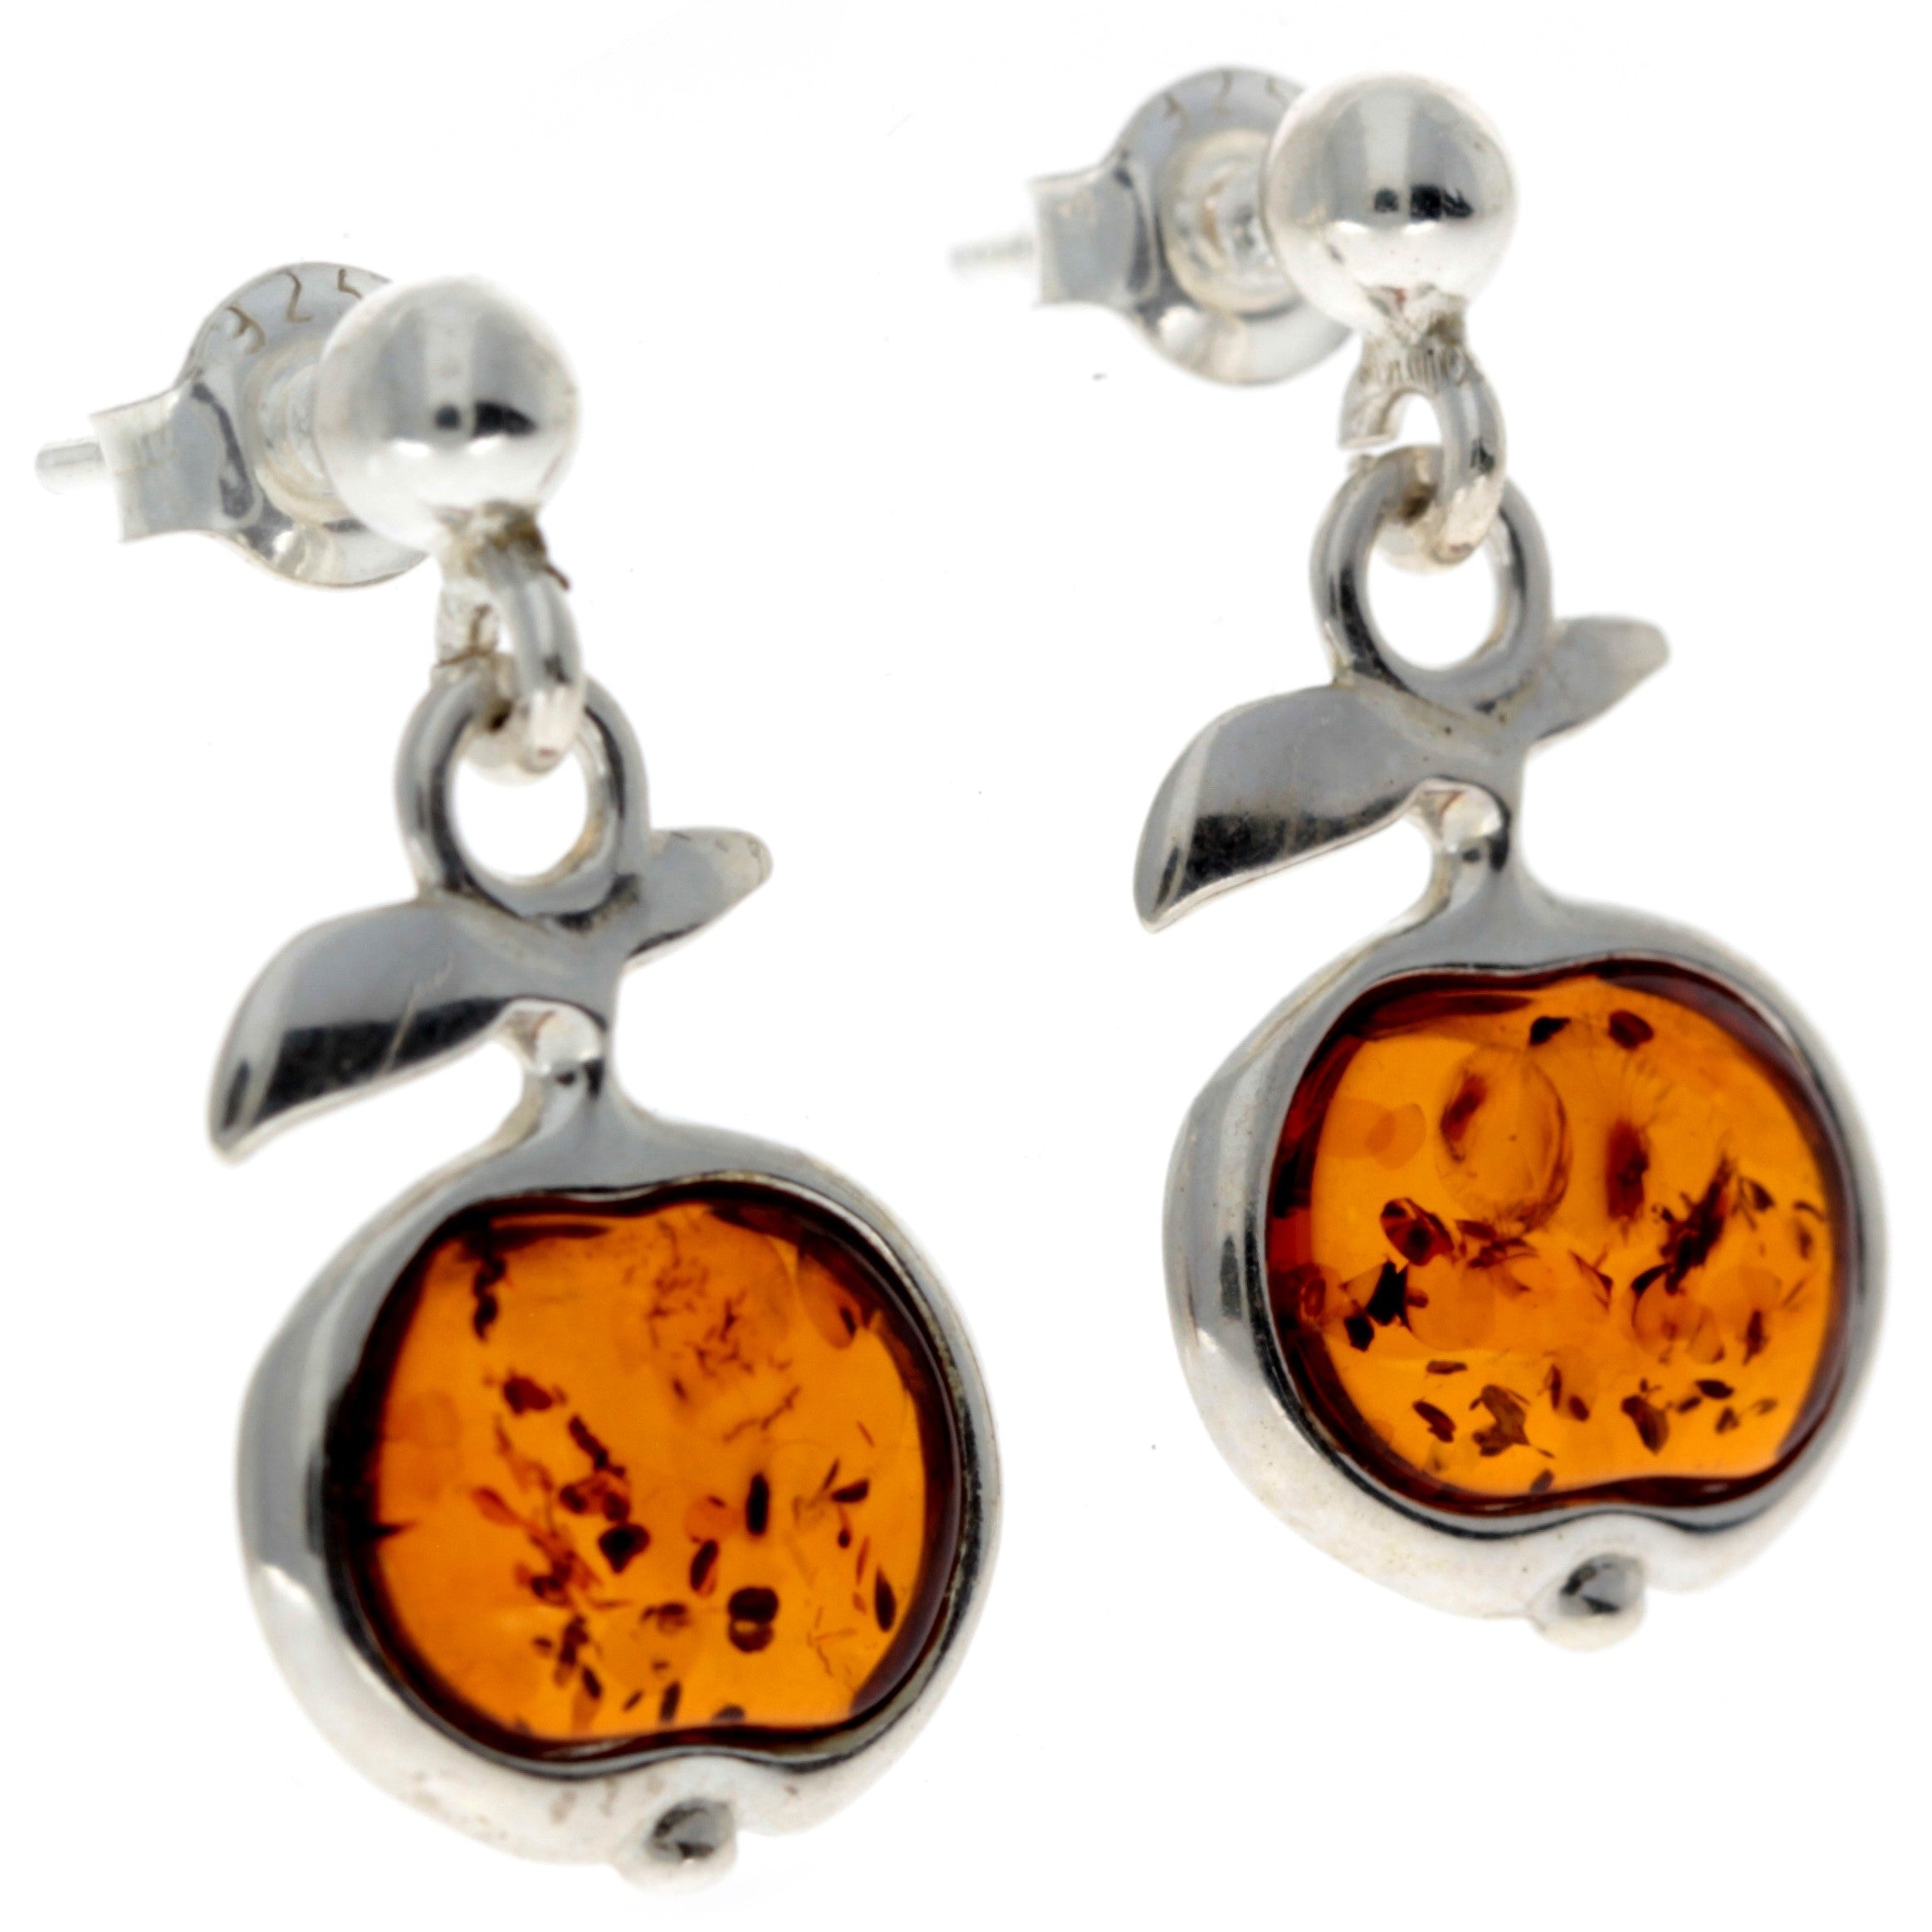 925 Sterling silver & Genuine Baltic Amber Modern Drop Apple Earrings - AB001C